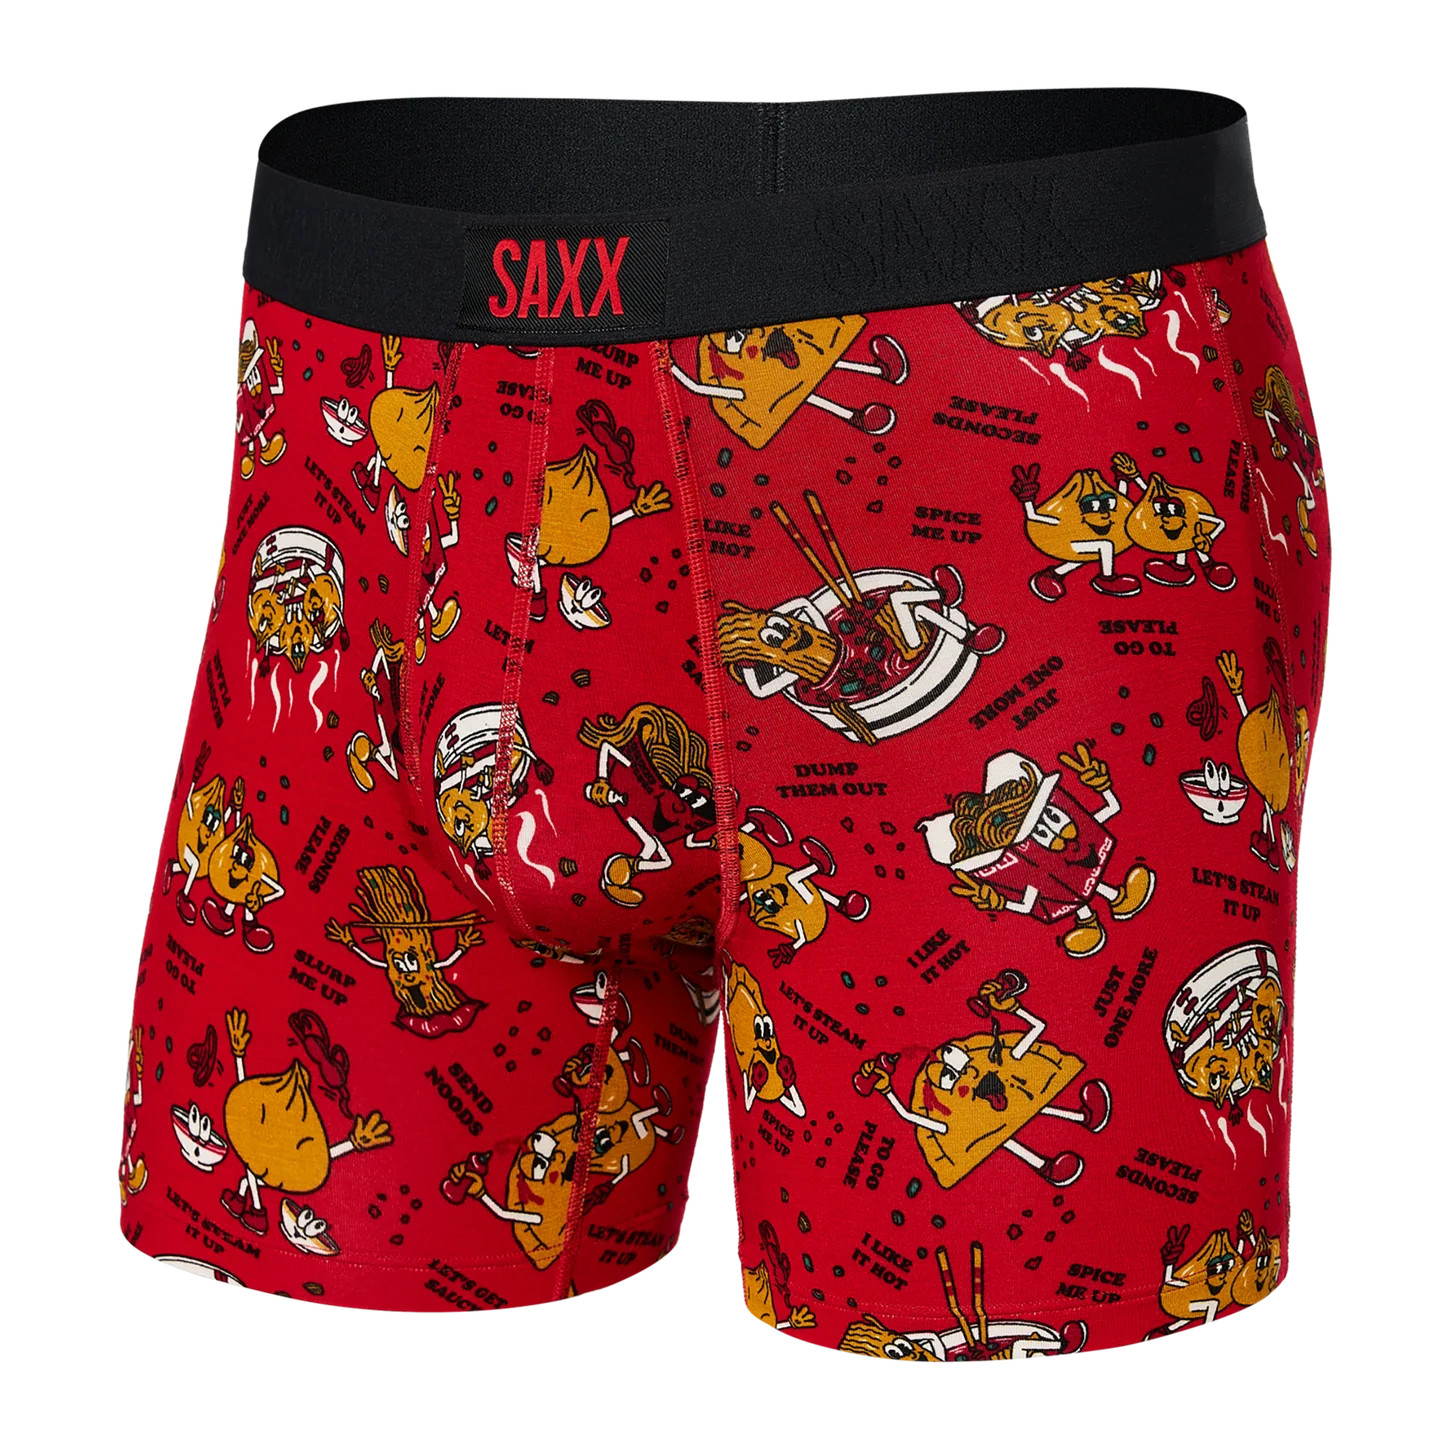  SAXX Mens Underwear - Vibe Super Soft Boxer Brief 2